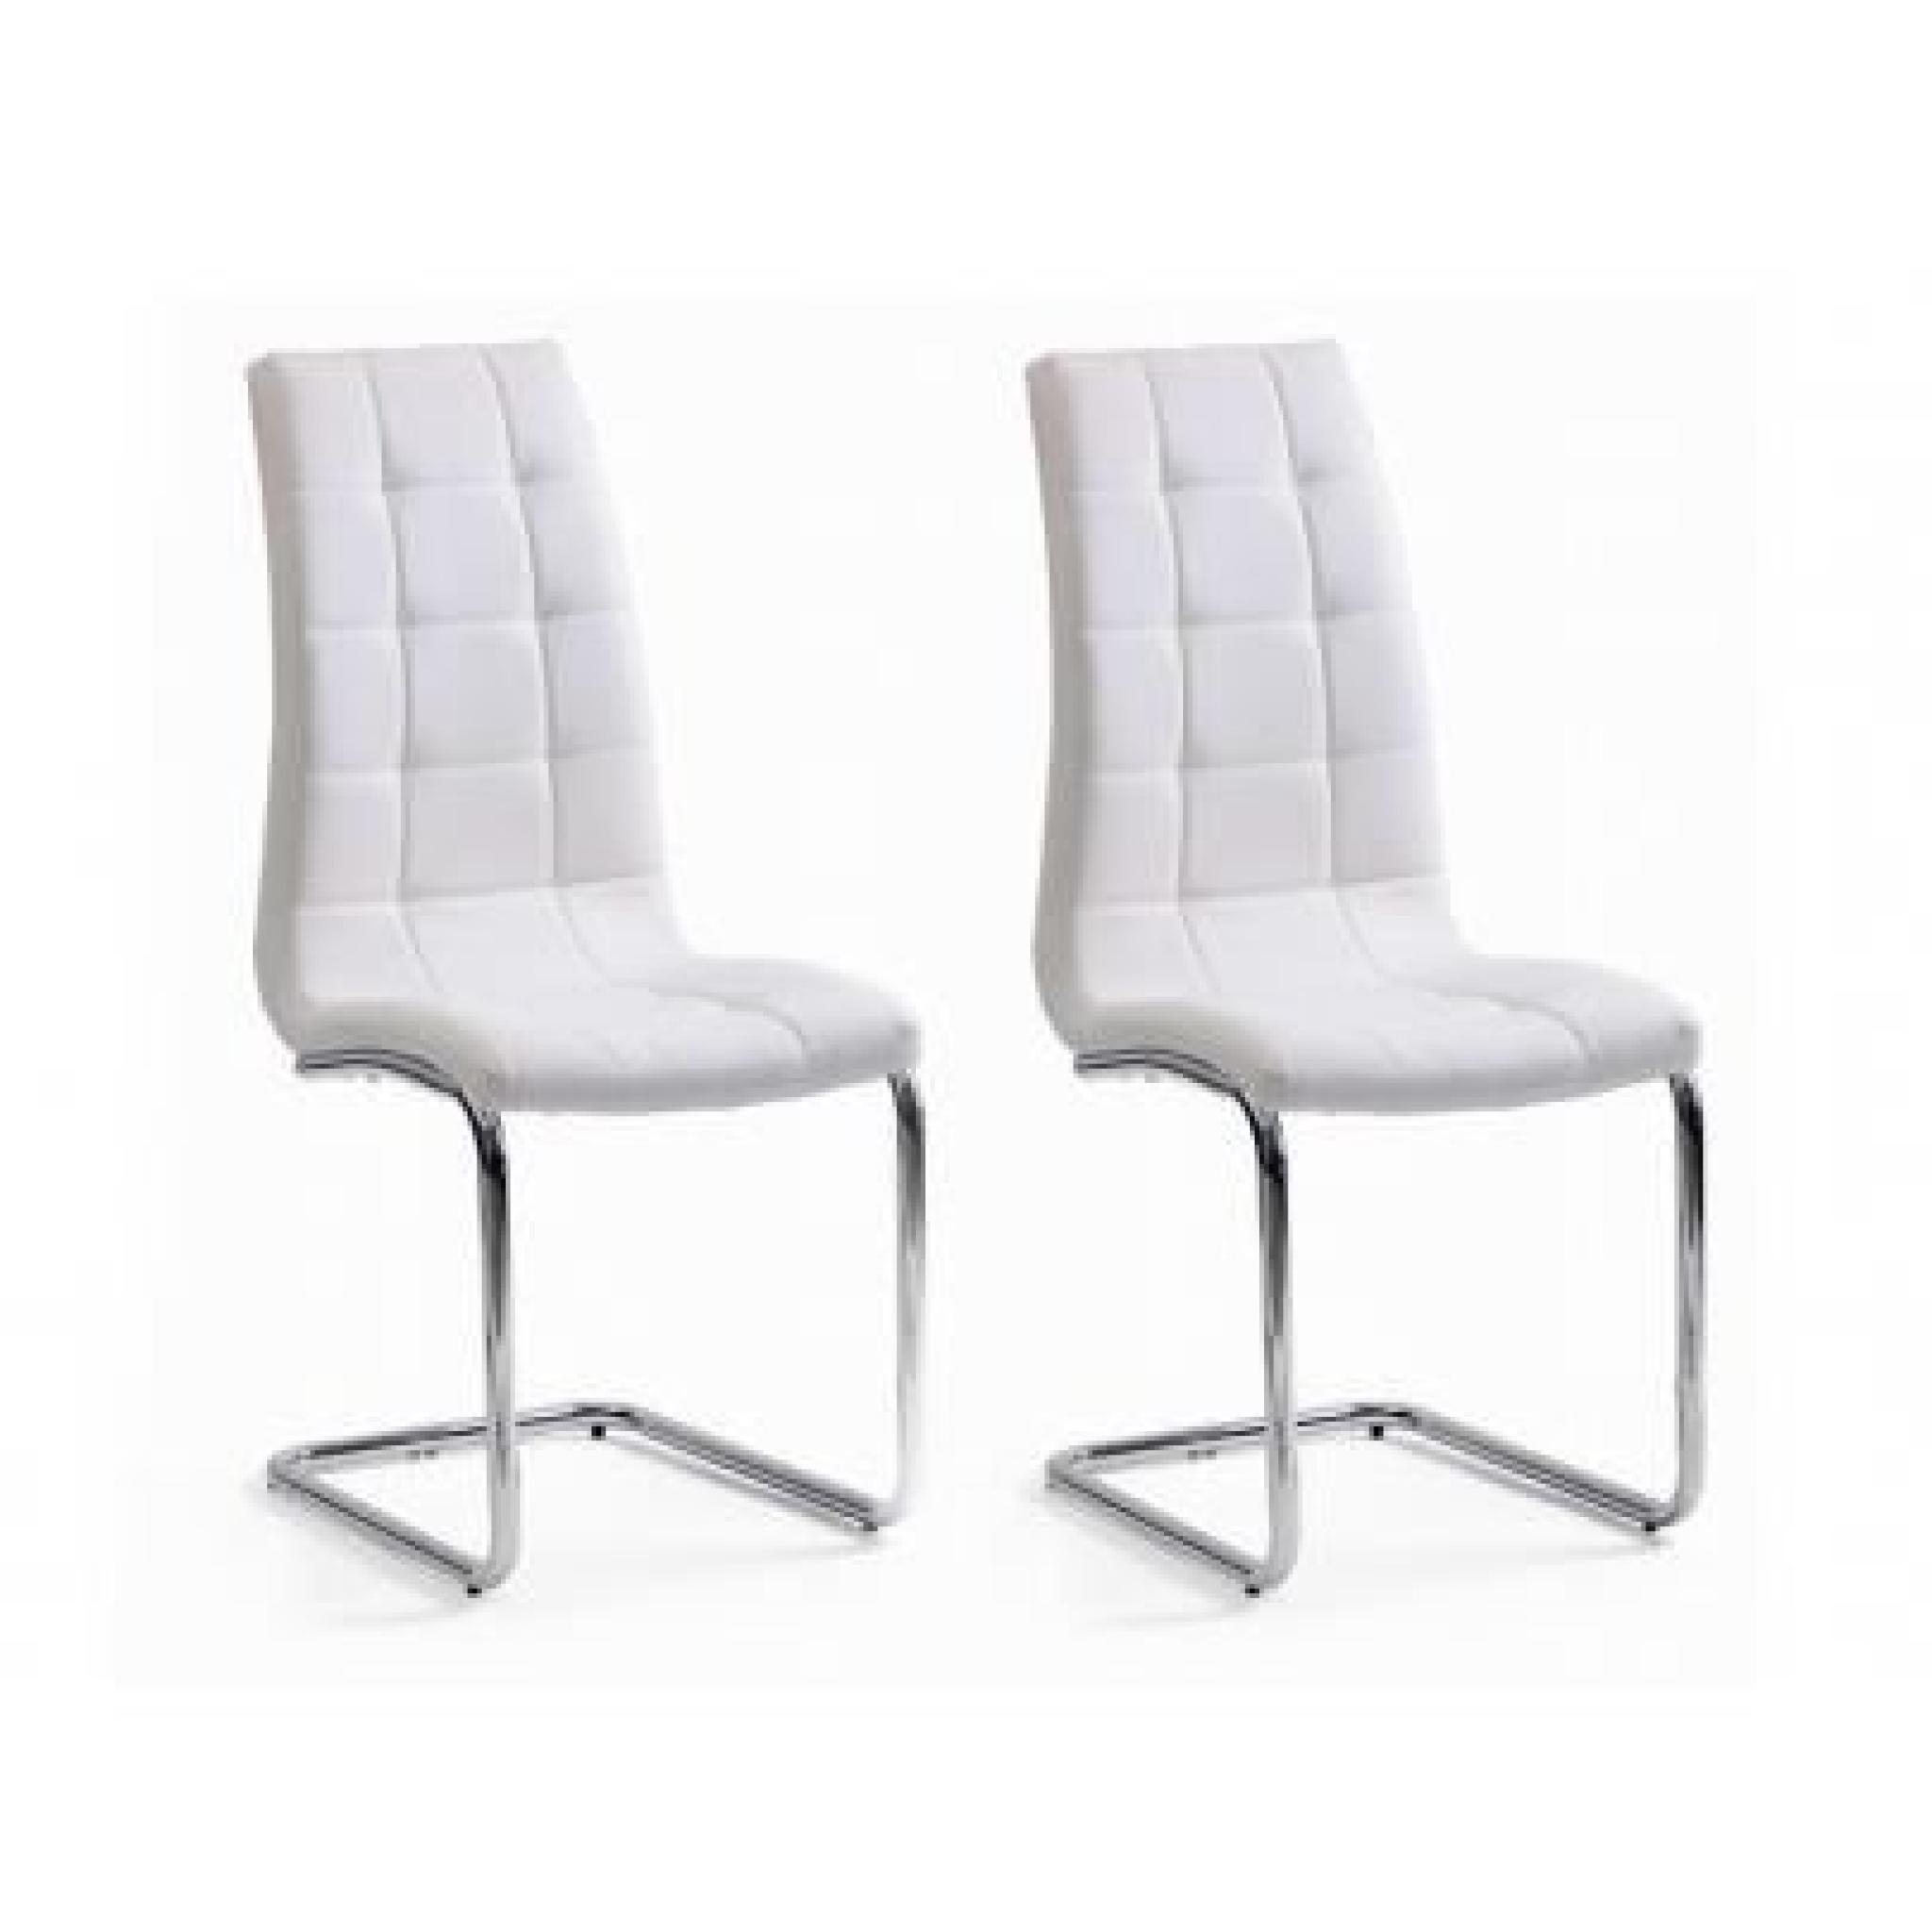  Lot de 2 chaises NADIA - PU - Coloris blanc